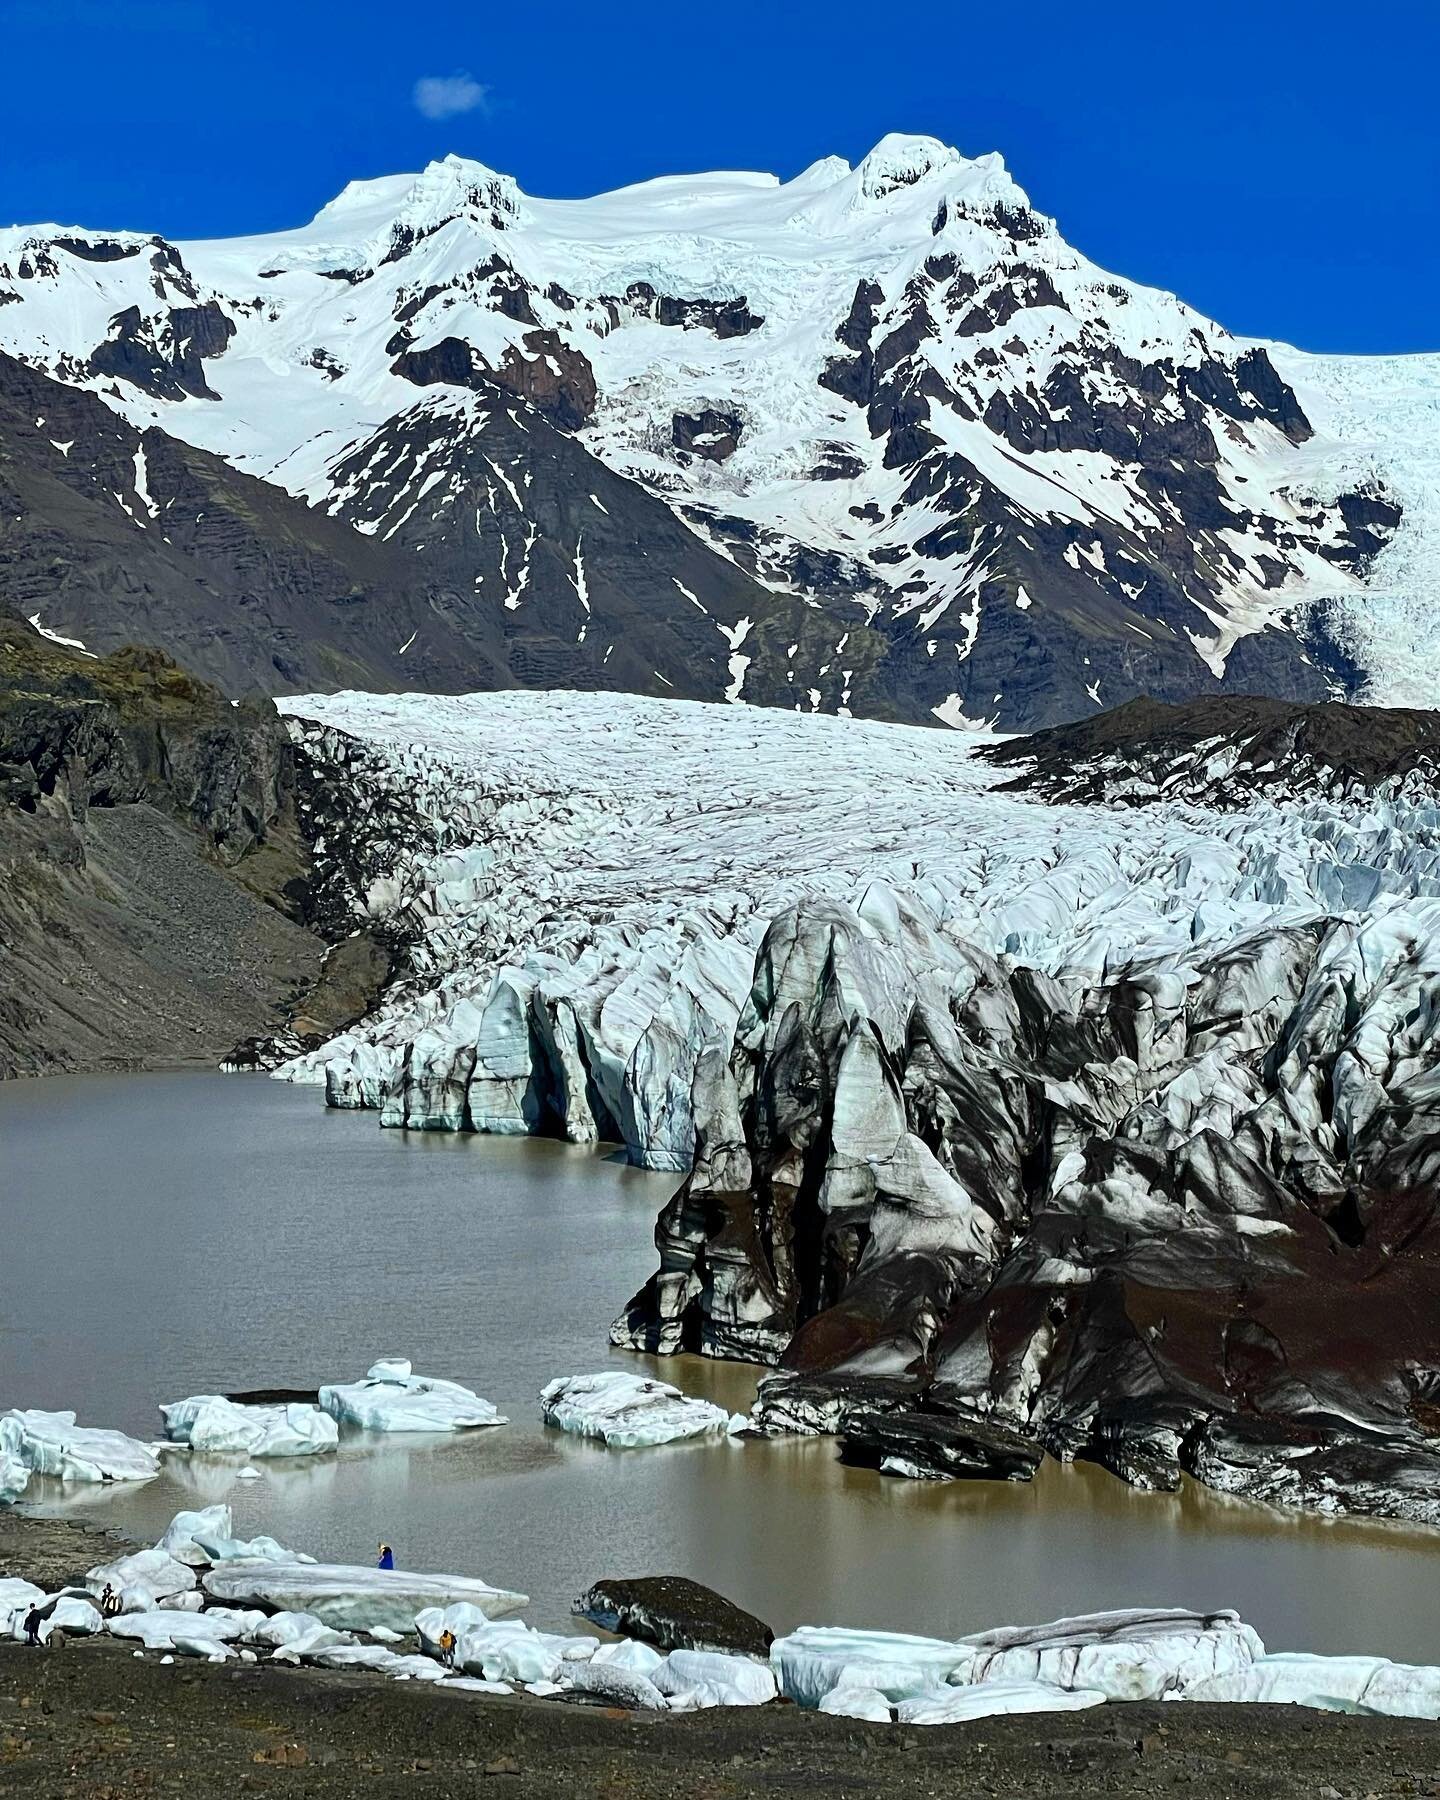 Ice to see you today. 🧊
.
.
.
.
.
.
.
.
.
.
.
.
.
.
#iceland #glacier #icelandtravel #icelandscape #travel #travelphotography #travelling #travelgram #photography #landscapephotography #landscape